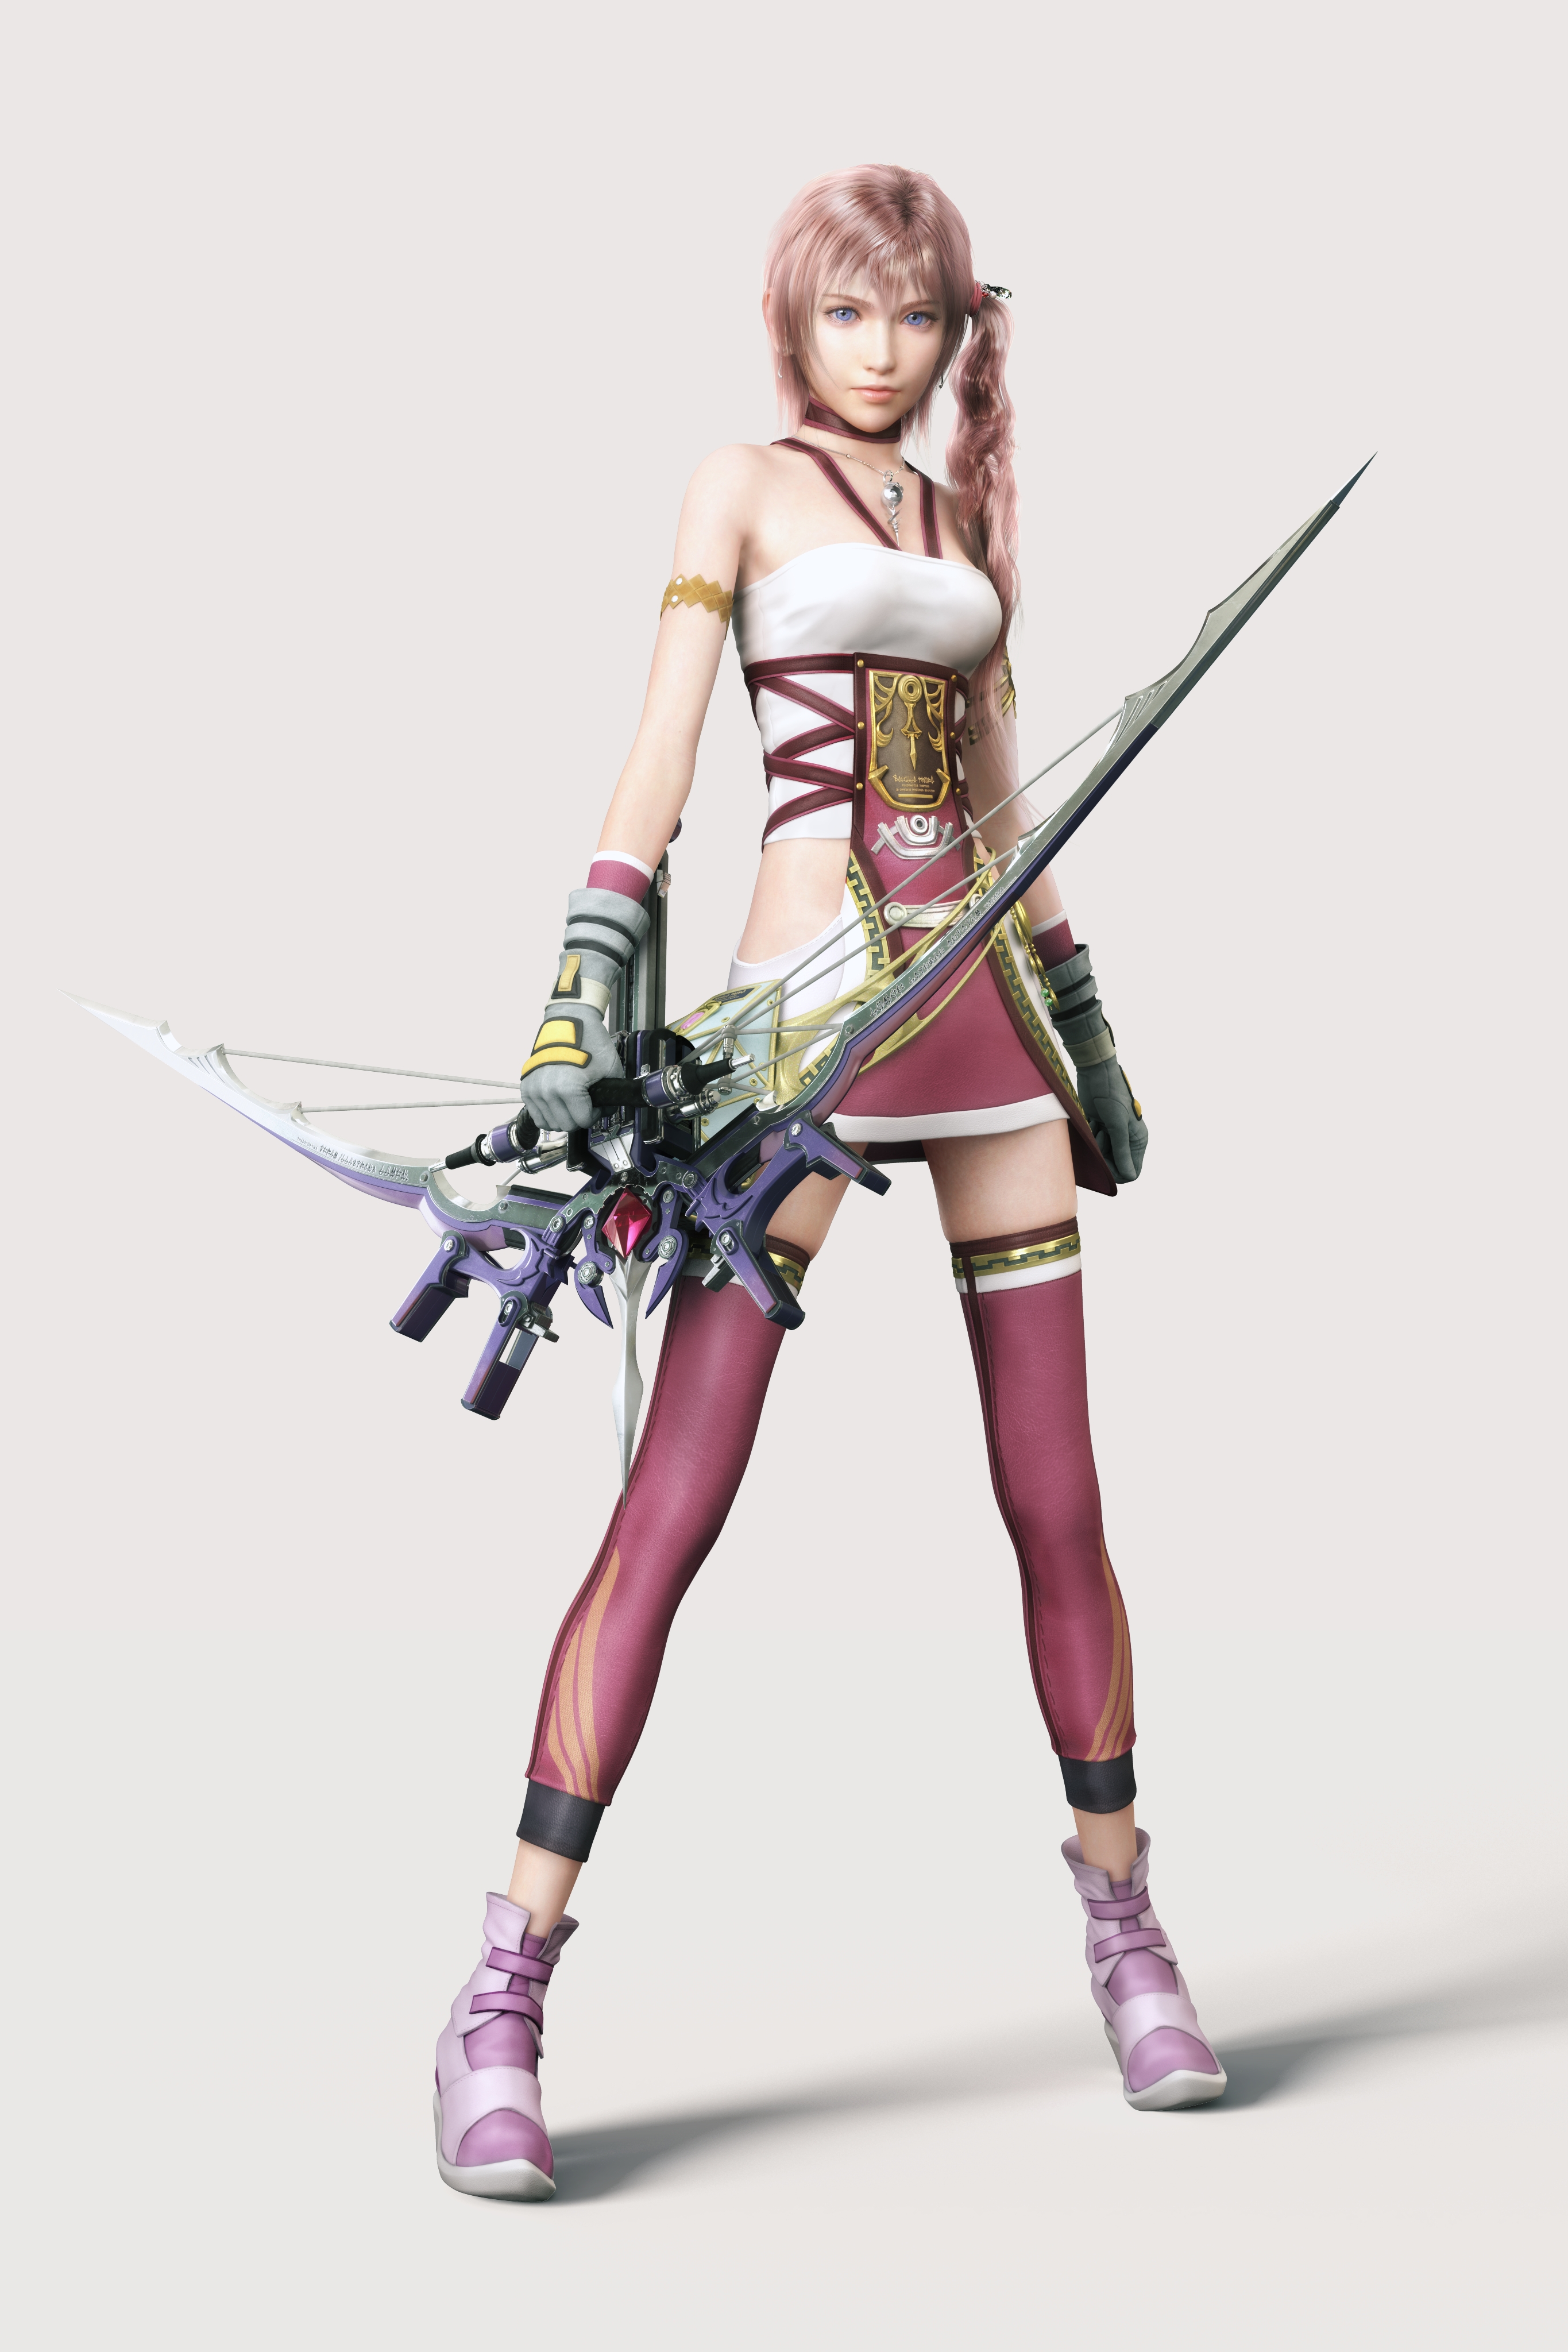 Final Fantasy Xiii Serah Farron 2730x4095